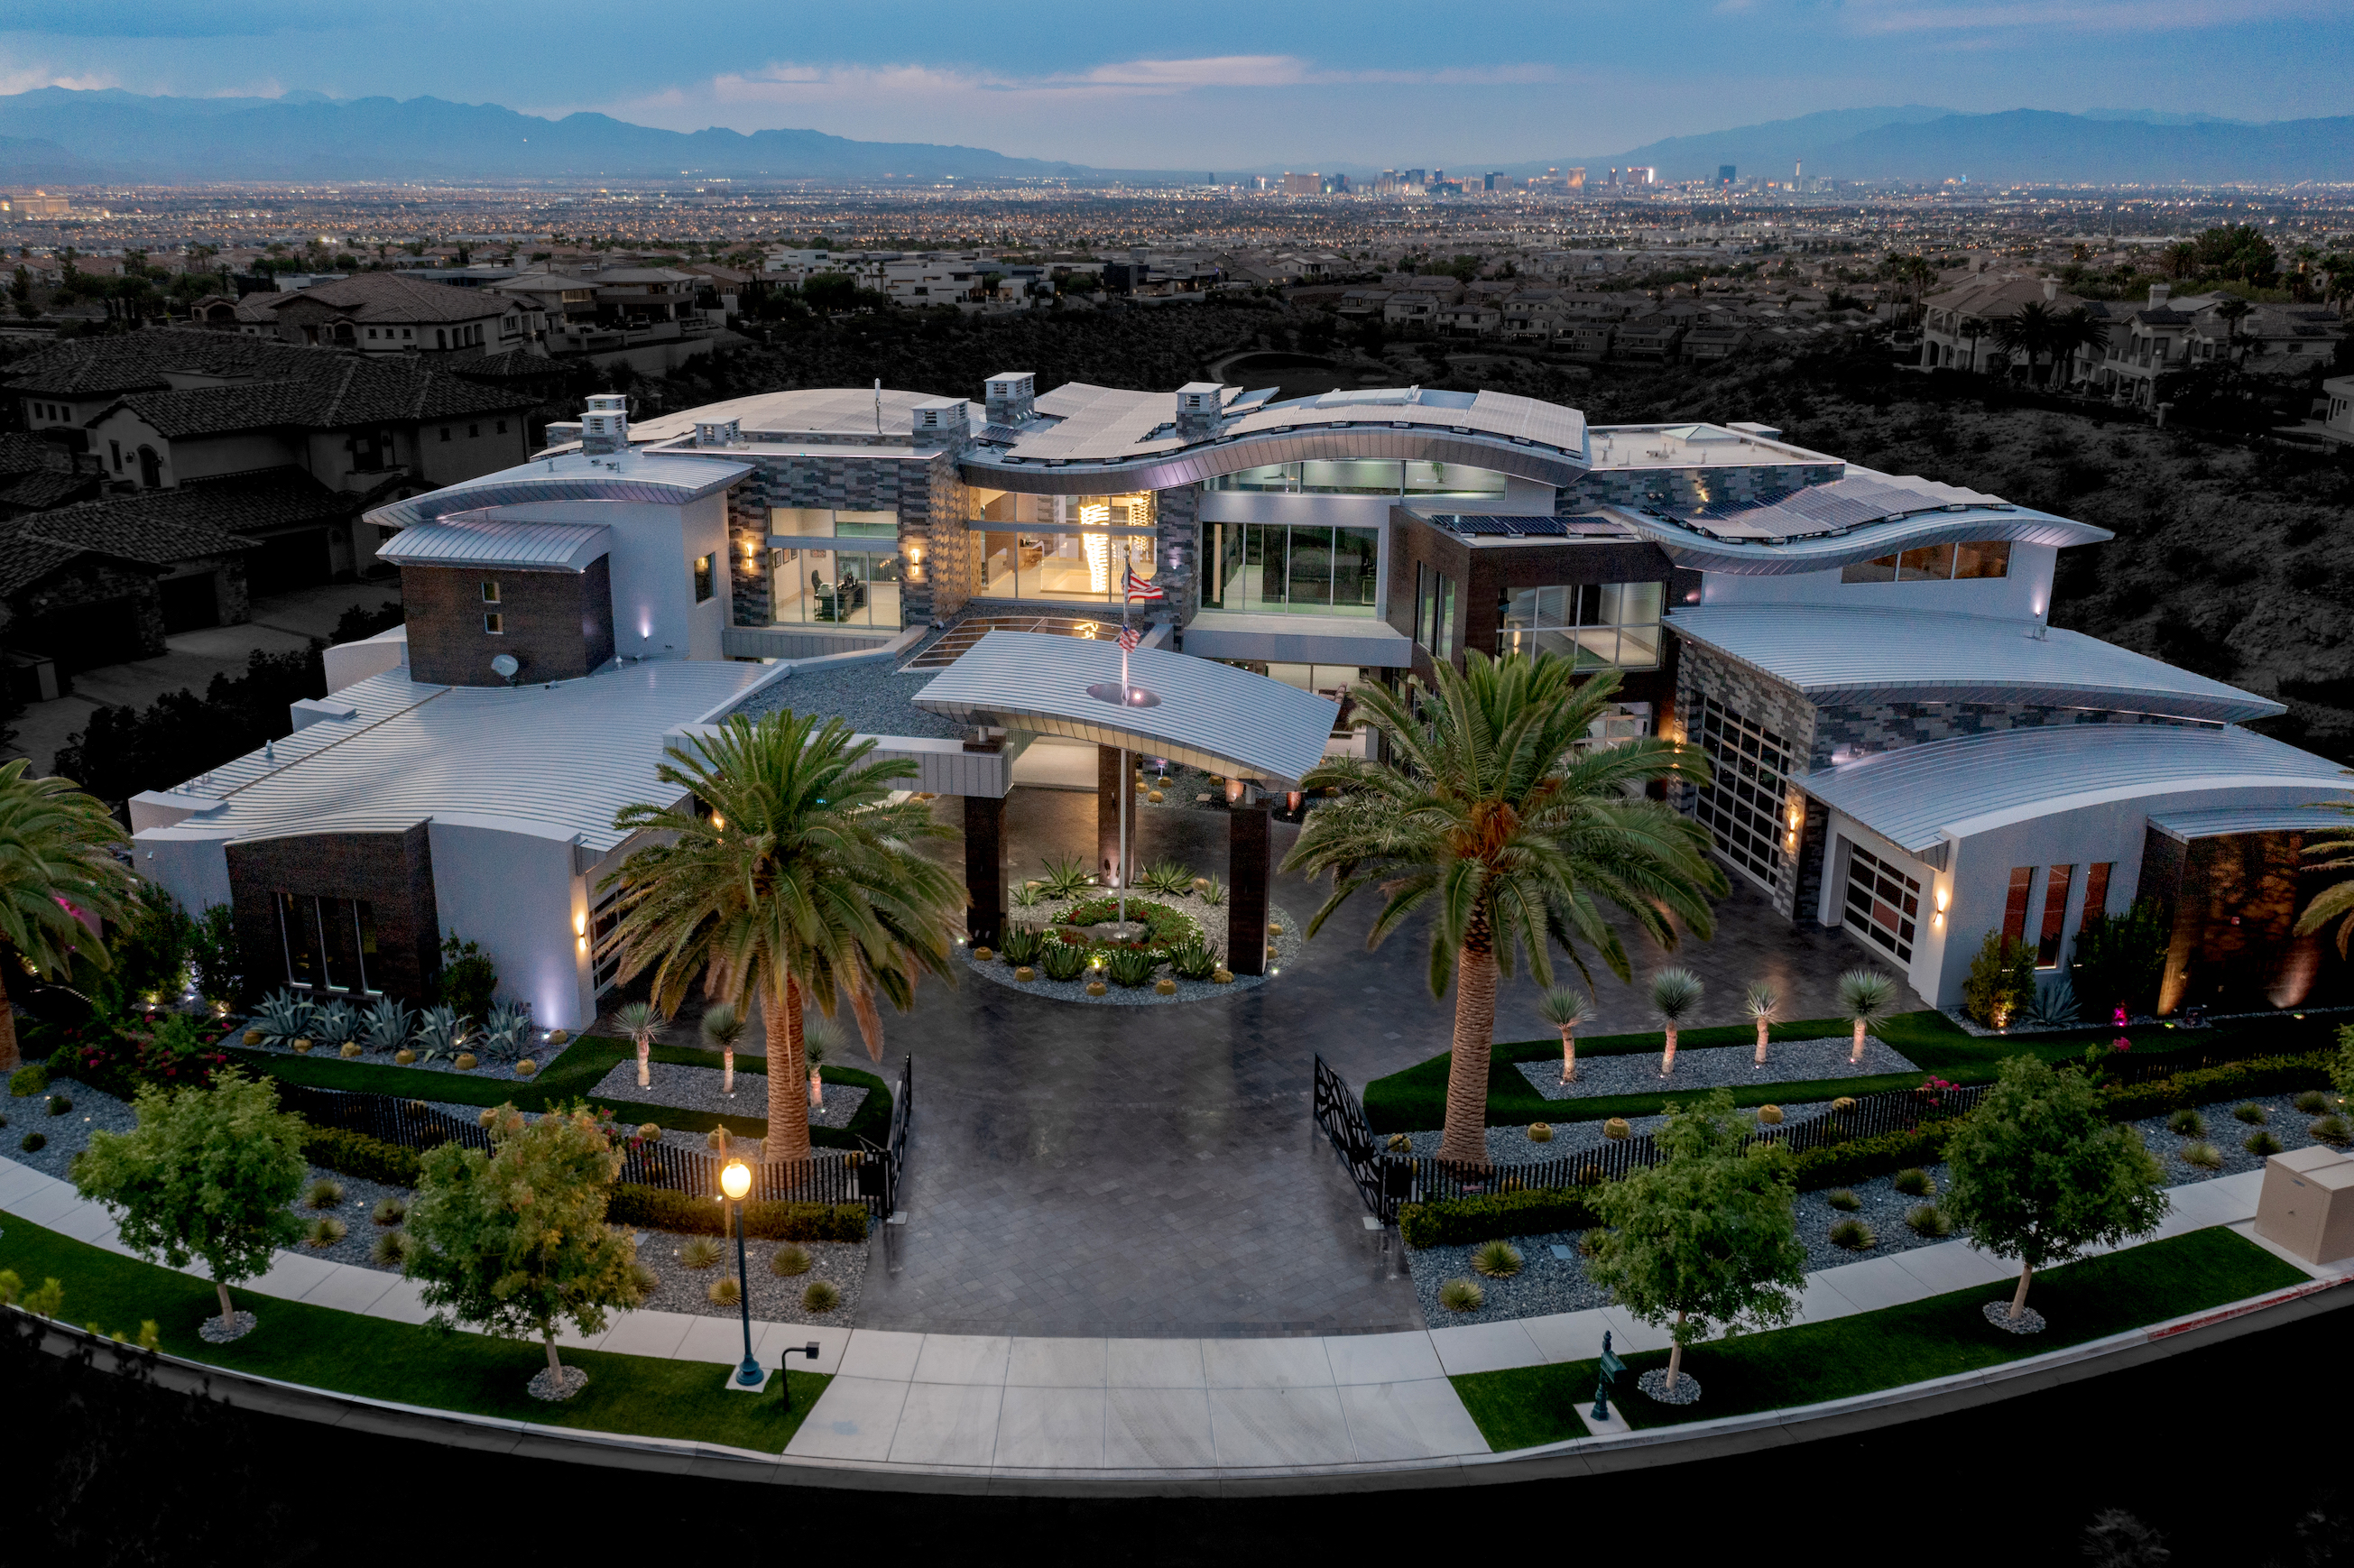 Expansive modern estate with solar-paneled roof set to Vegas strip backdrop at dusk.